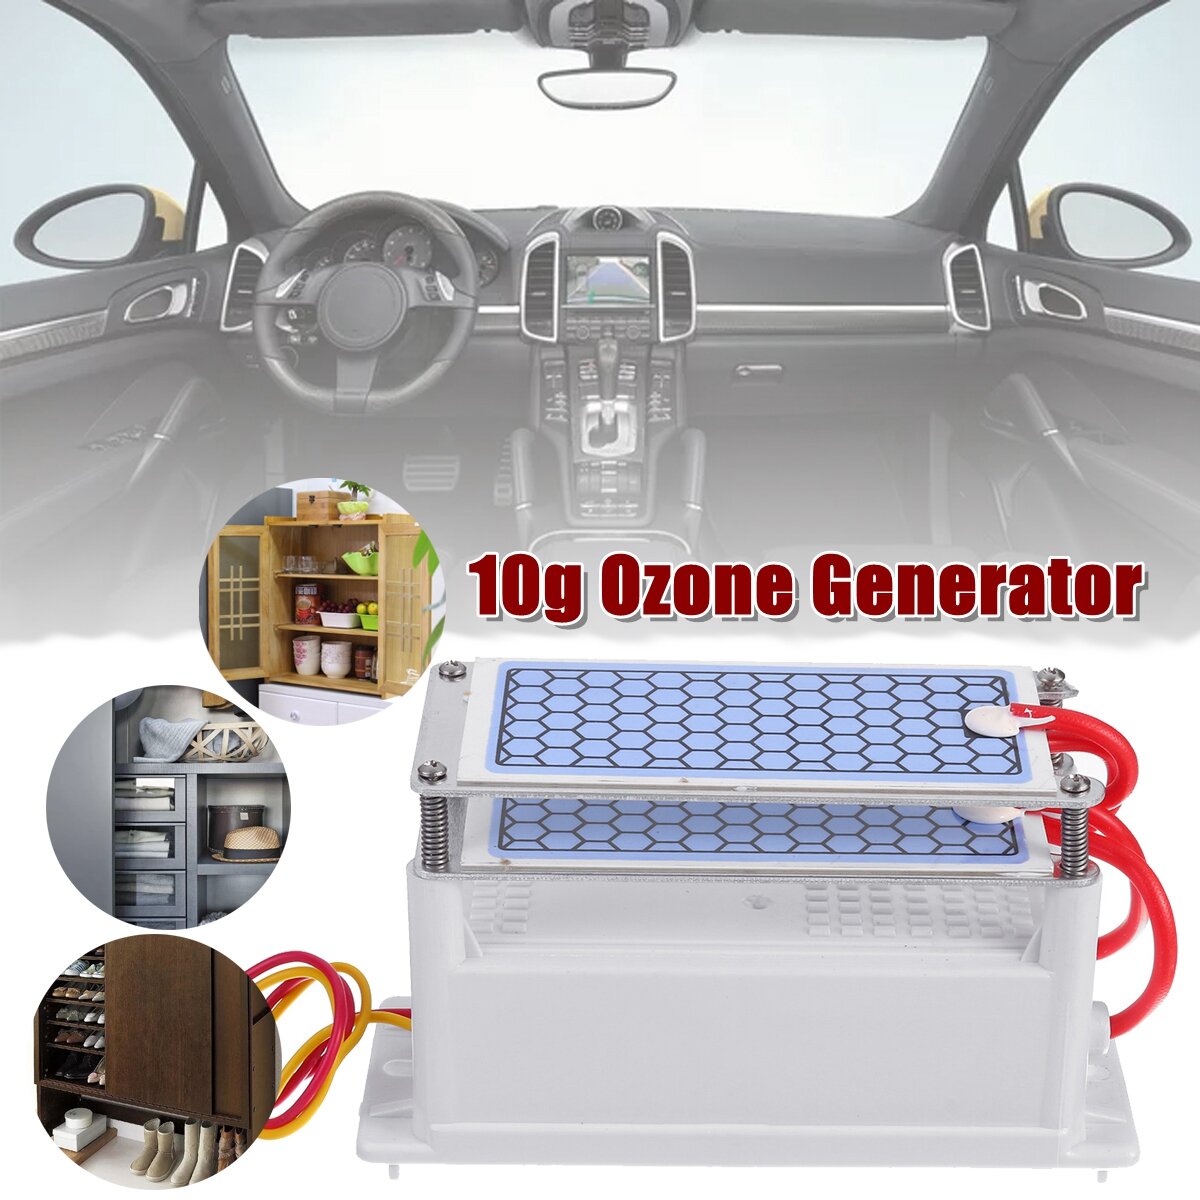 10g Ozone Generator Ozone Disinfection Machine Home & Commercial Air Purifier Cleaner Ozone Generator Deodorizer Sterili